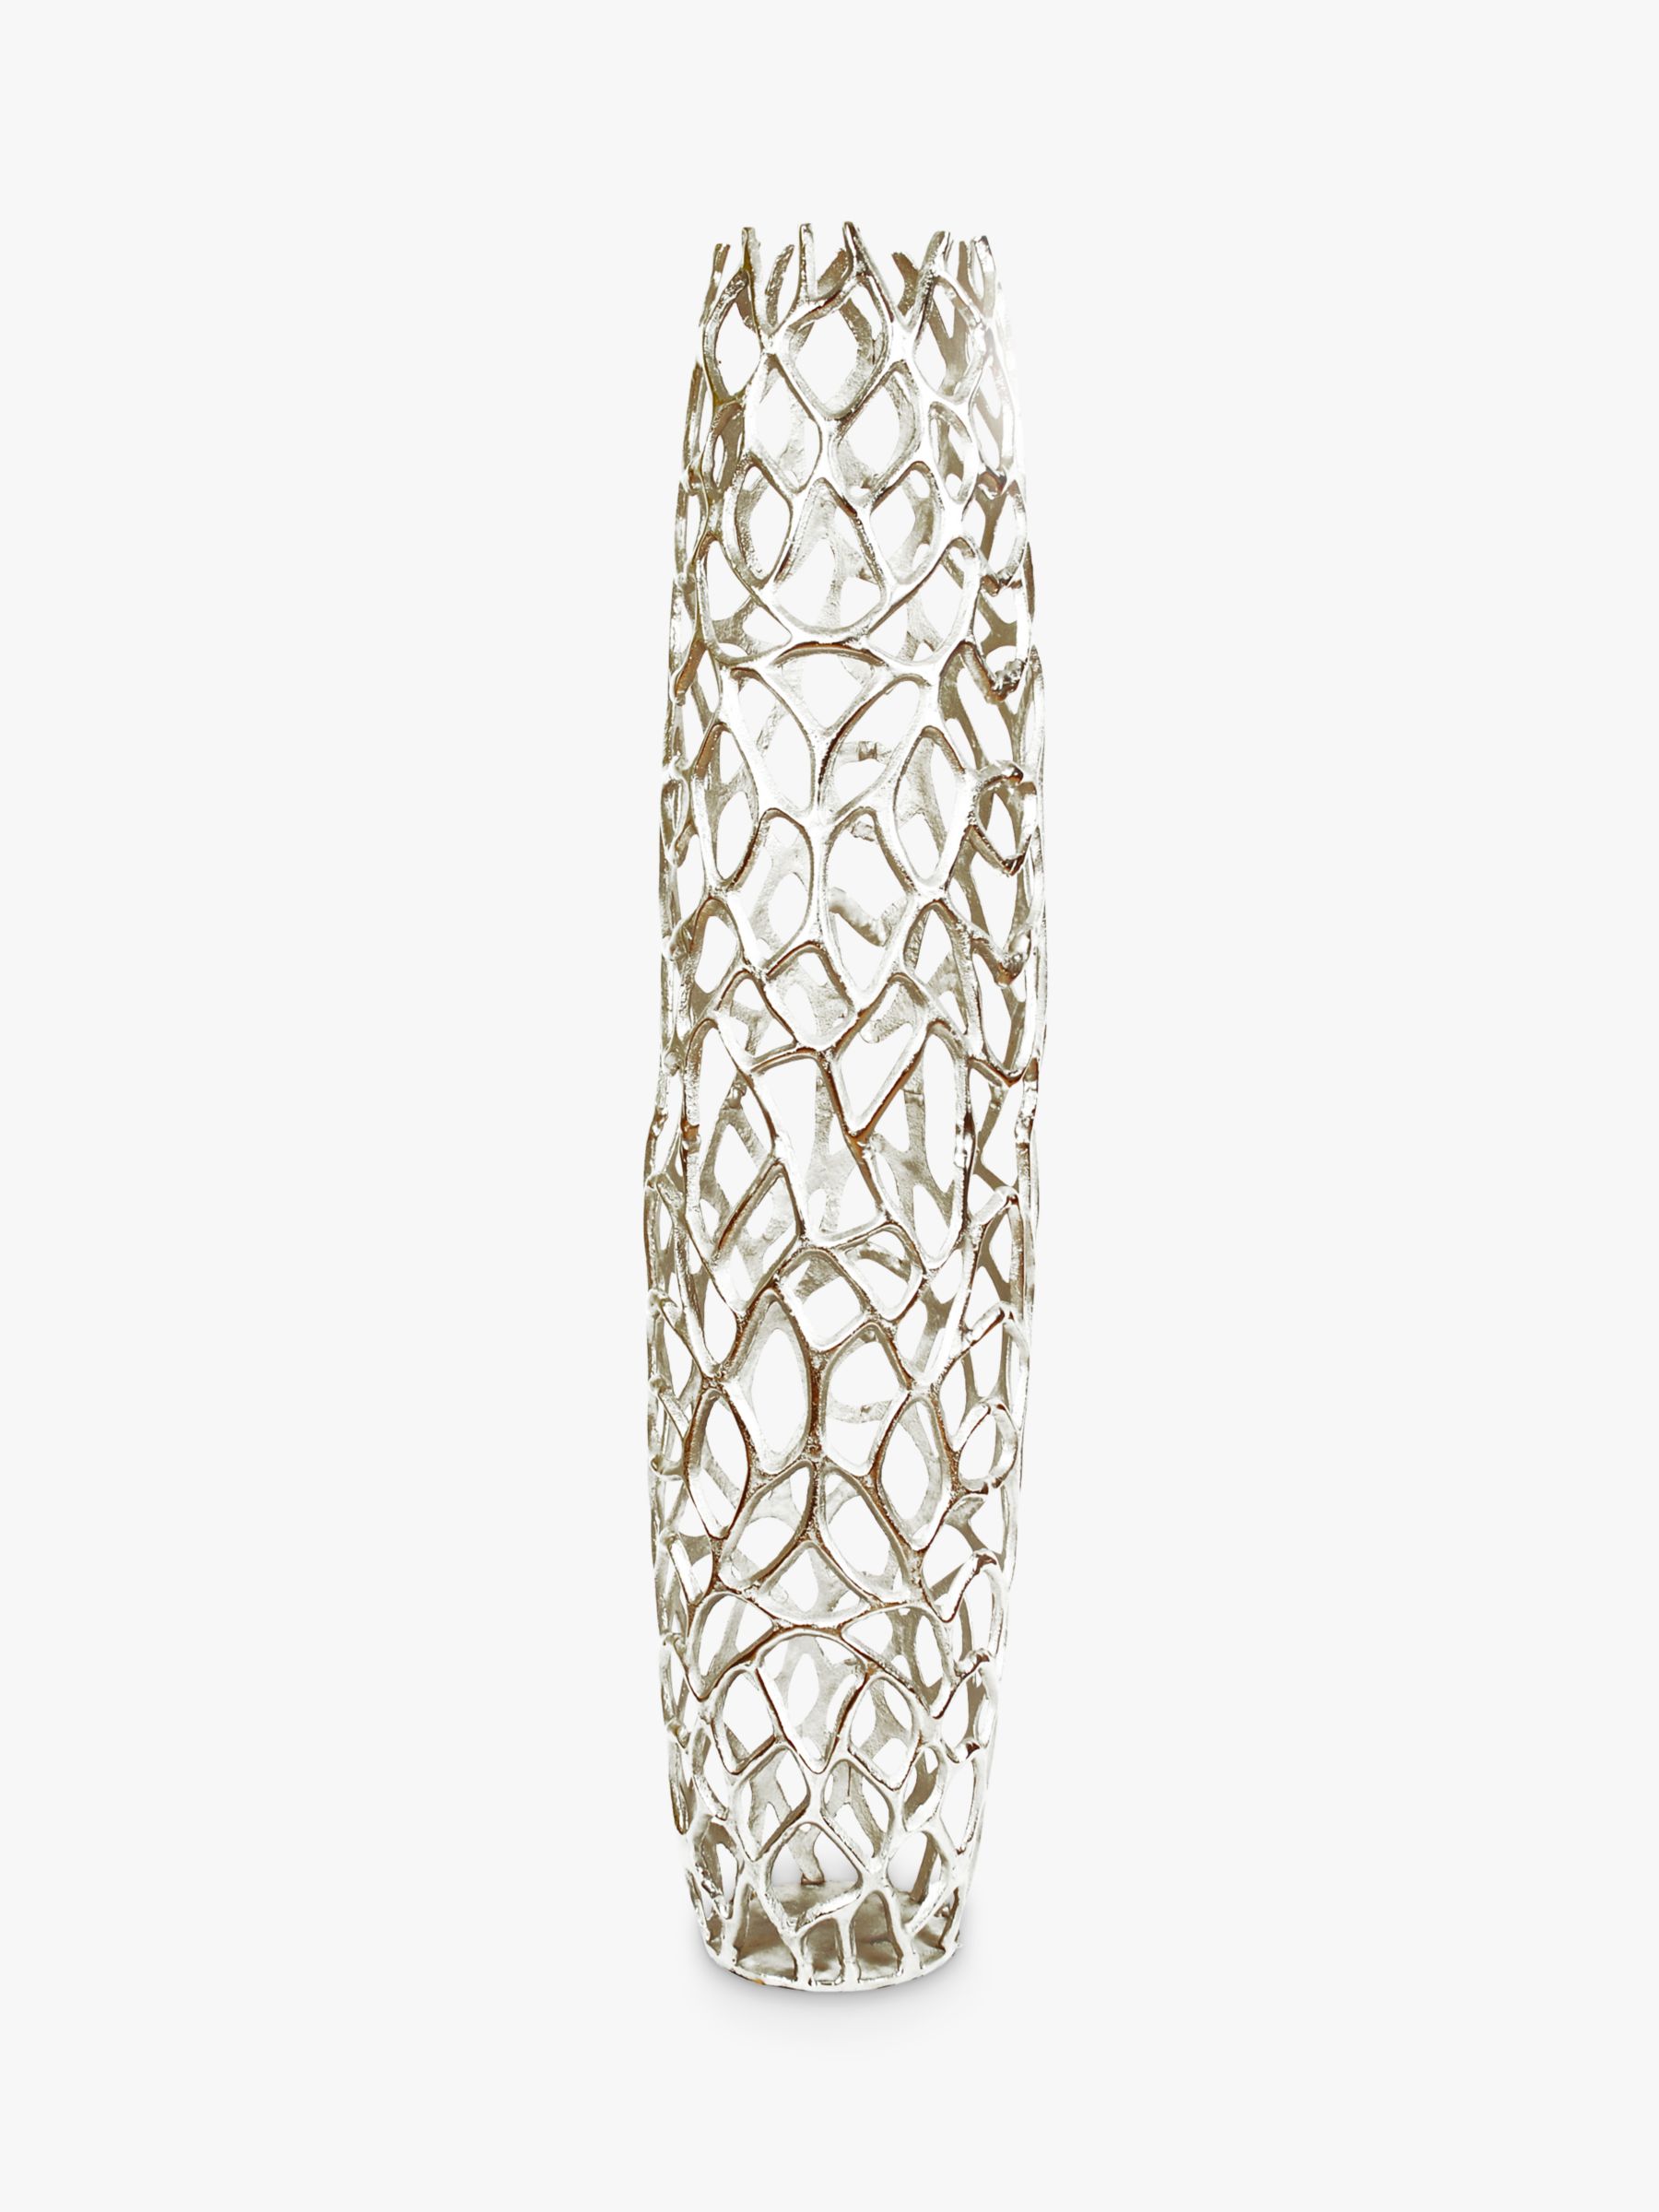 Libra Coral Vase Sculpture, Silver, H104cm